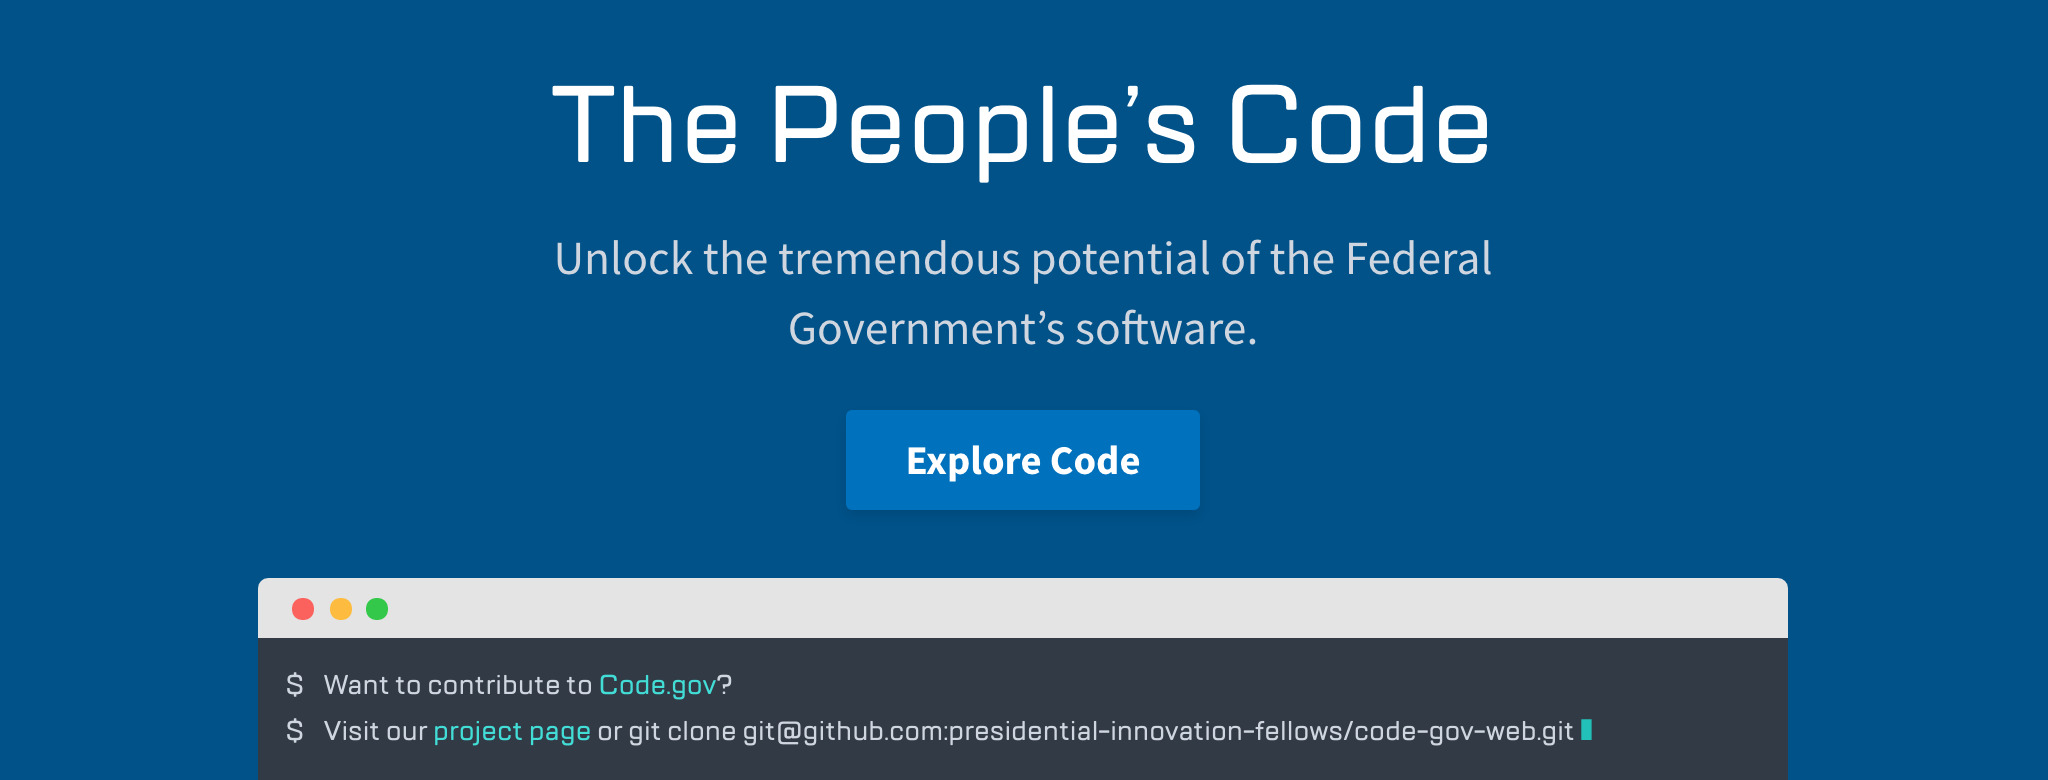 Код опен. Открытый код. Government code. Code people. Explore the code.